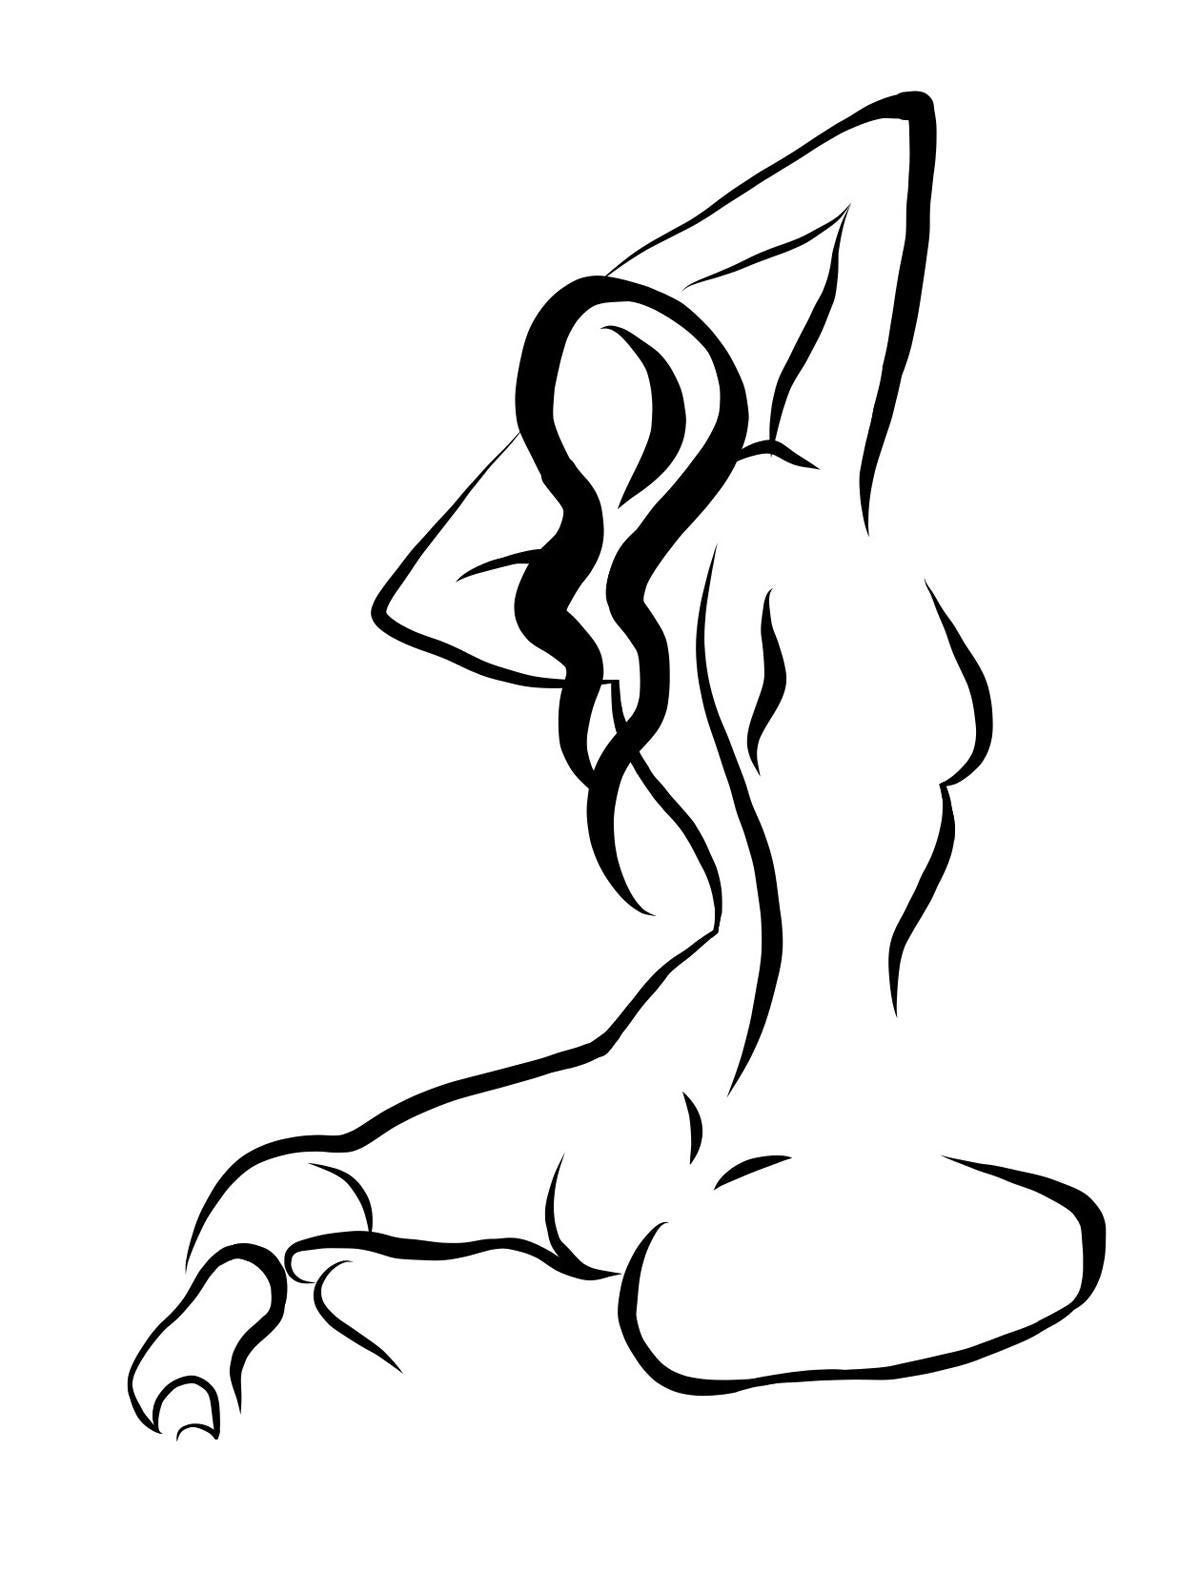 Haiku #17 - Digital Vector Drawing of Seated Female Nude from Behind